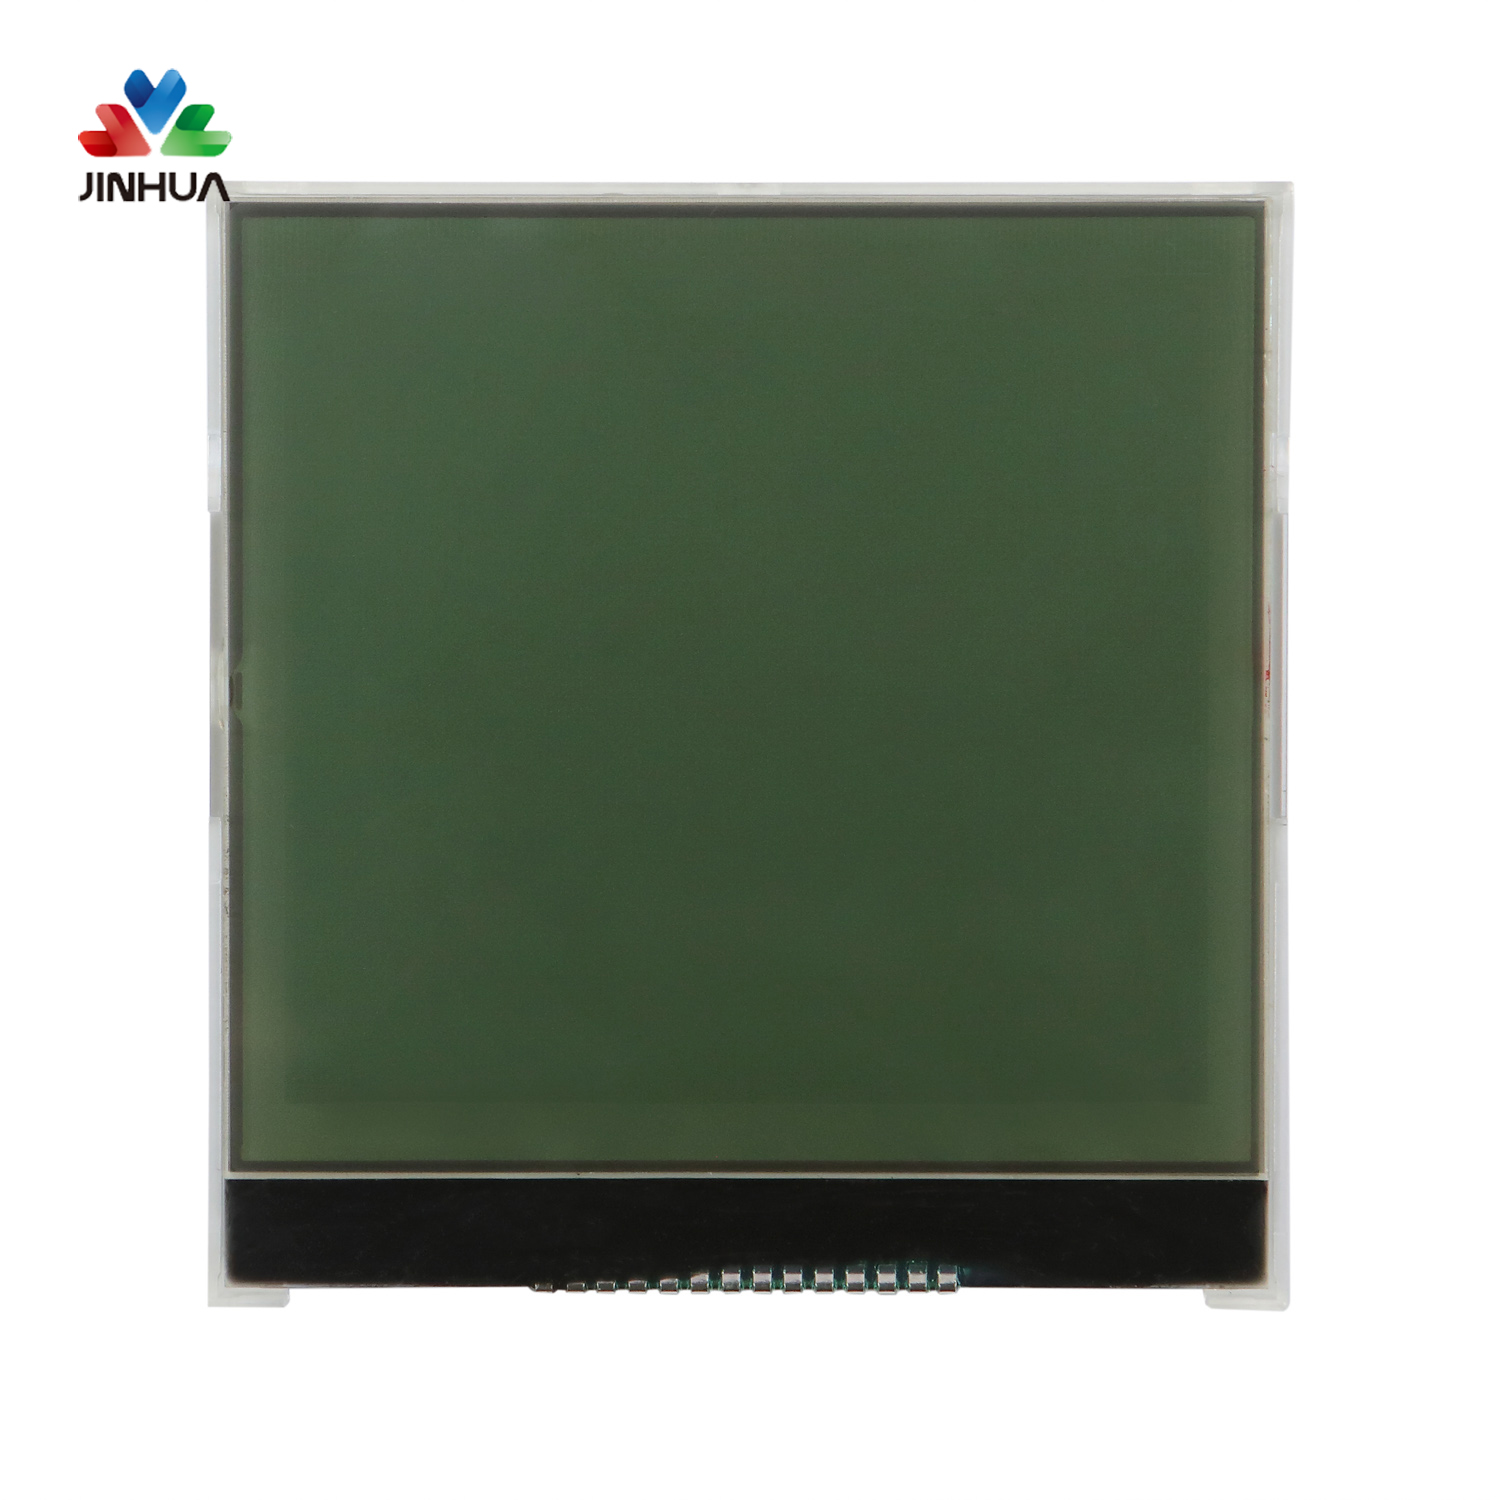 FPC positiver transflektiver FSTN-Punktmatrix-LCD-Bildschirm in China Hersteller